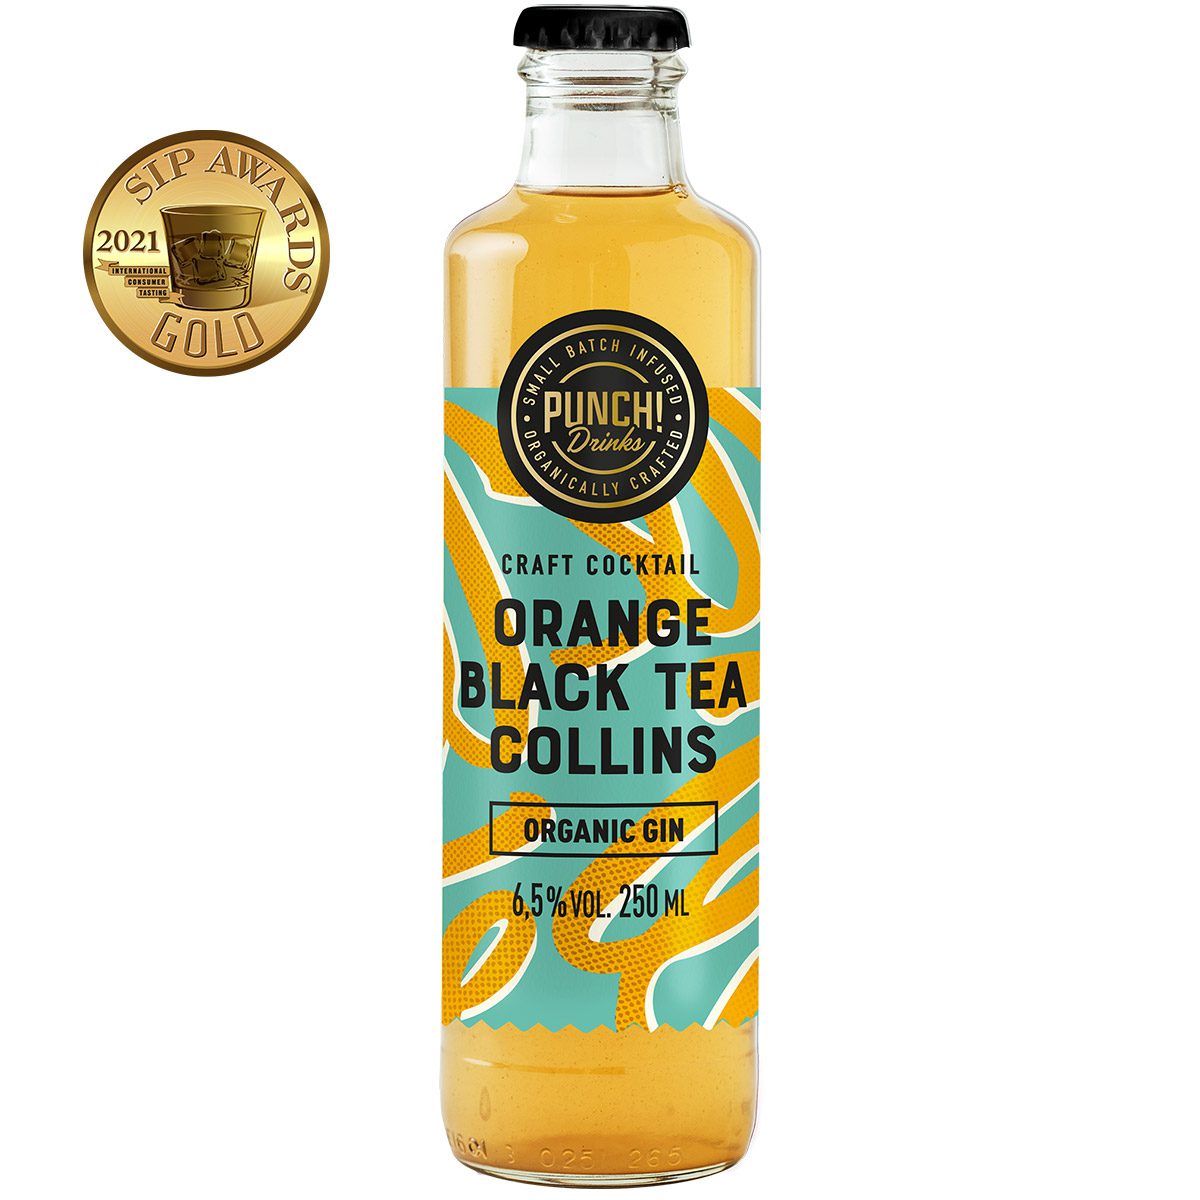 Orange & Black Tea Collins. Award winning organic gin cocktail by Punch Club®